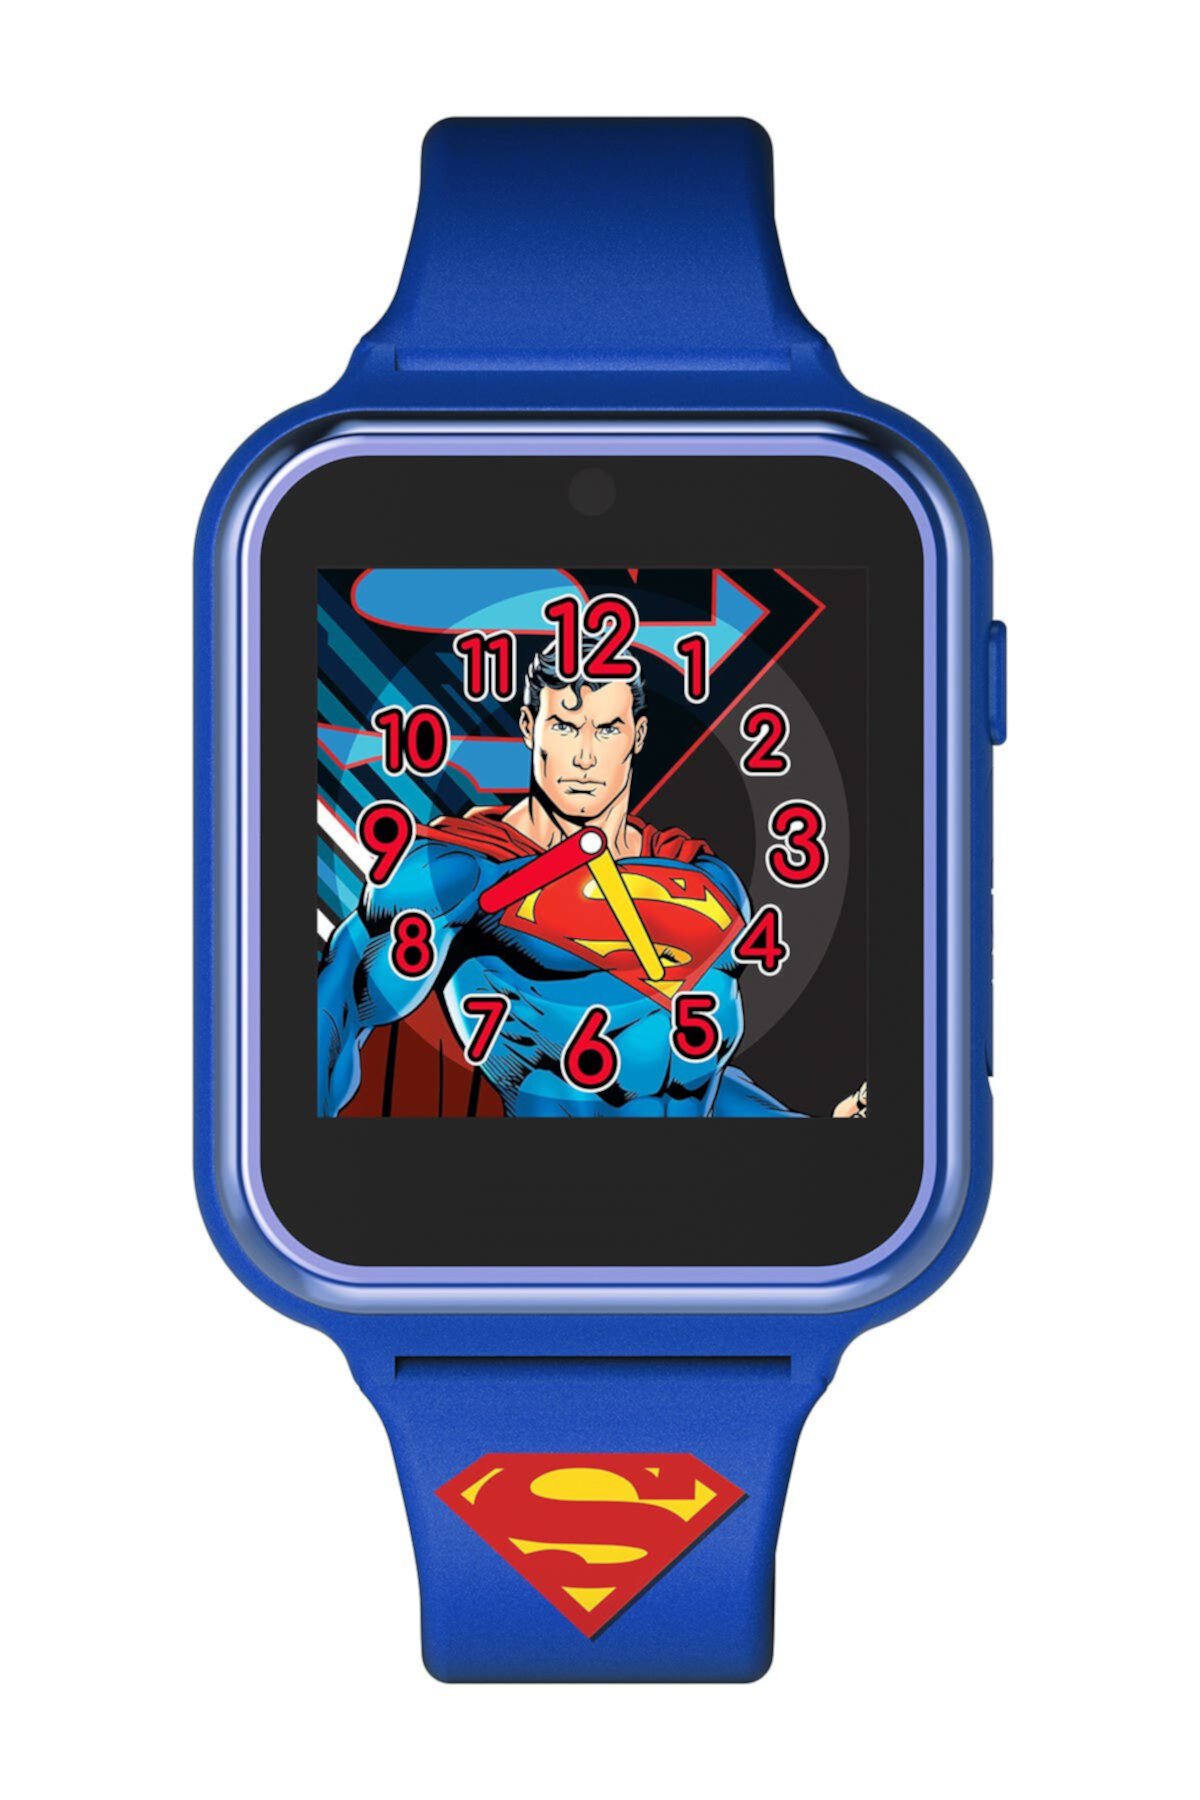 Интерактивные смарт-часы Супермена ITime